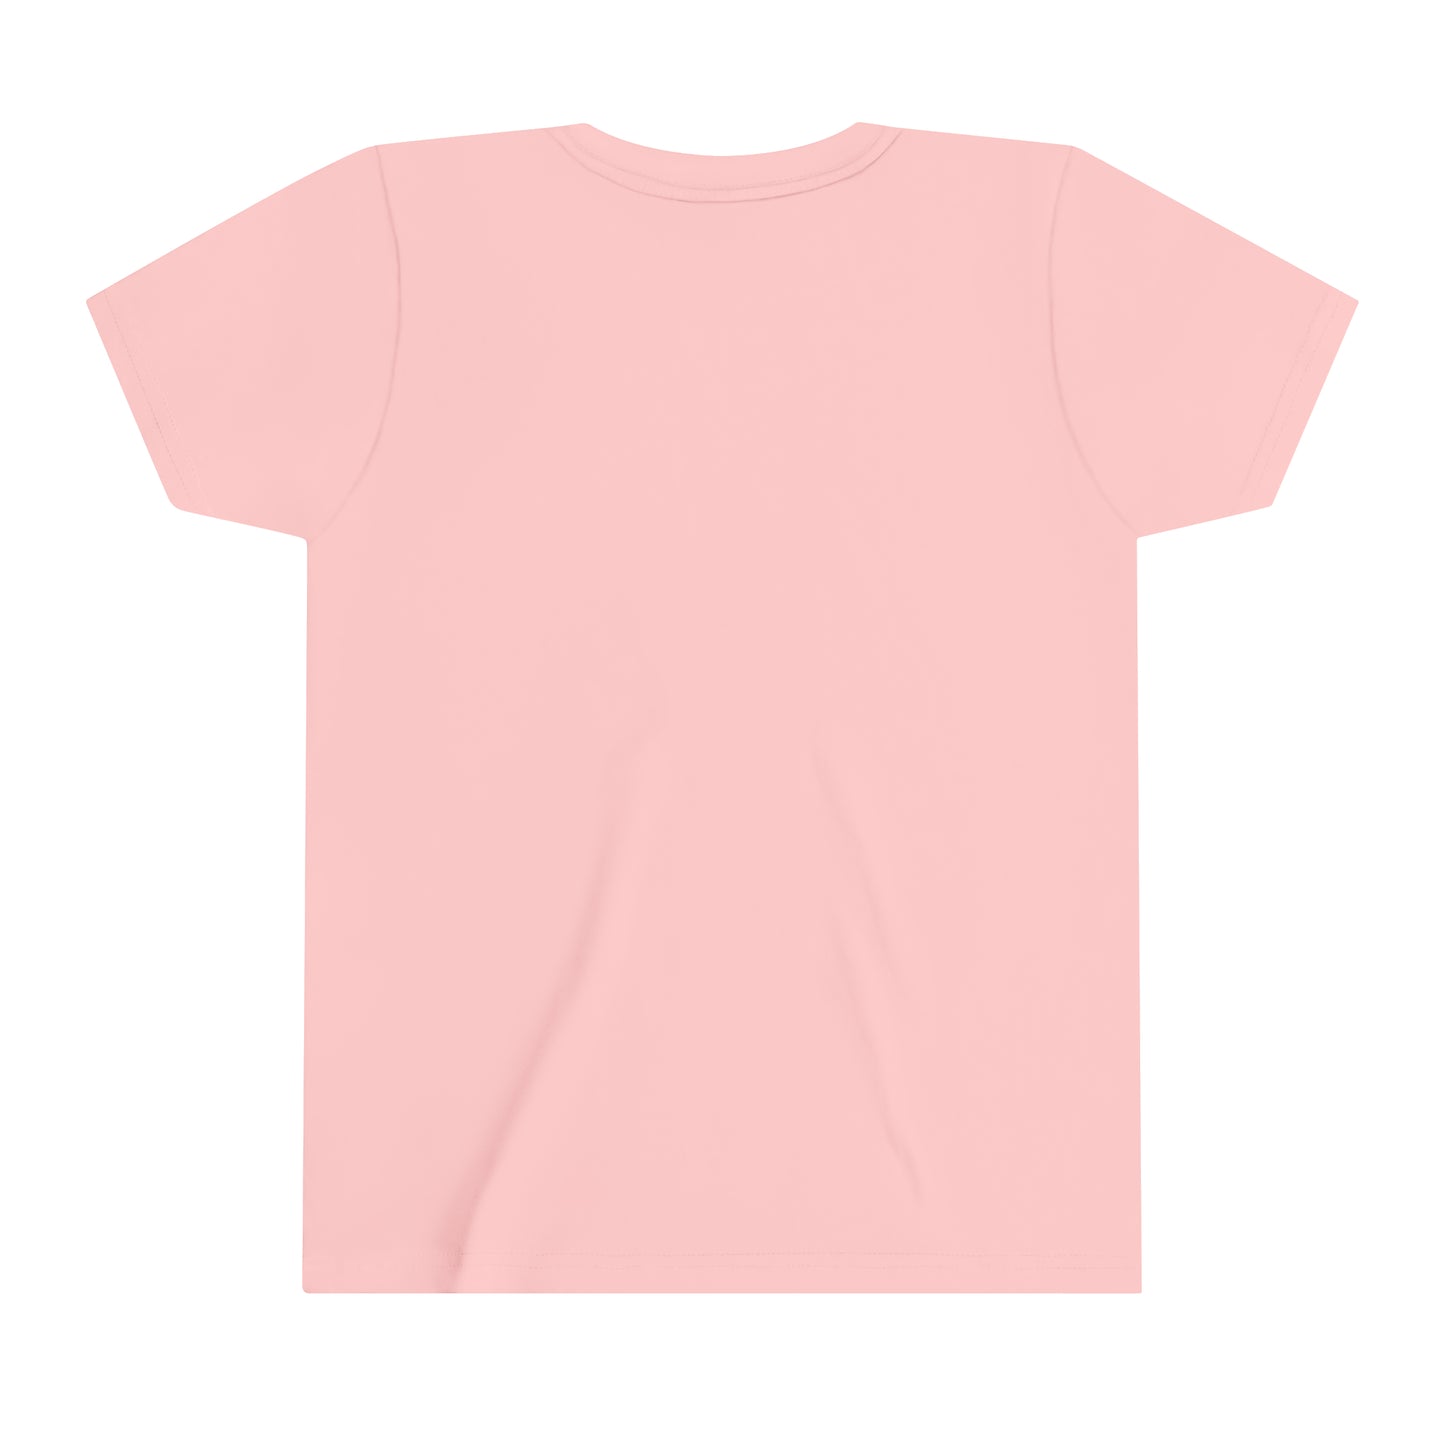 Kids Map of Israel - minimalist design short sleeve t-shirt